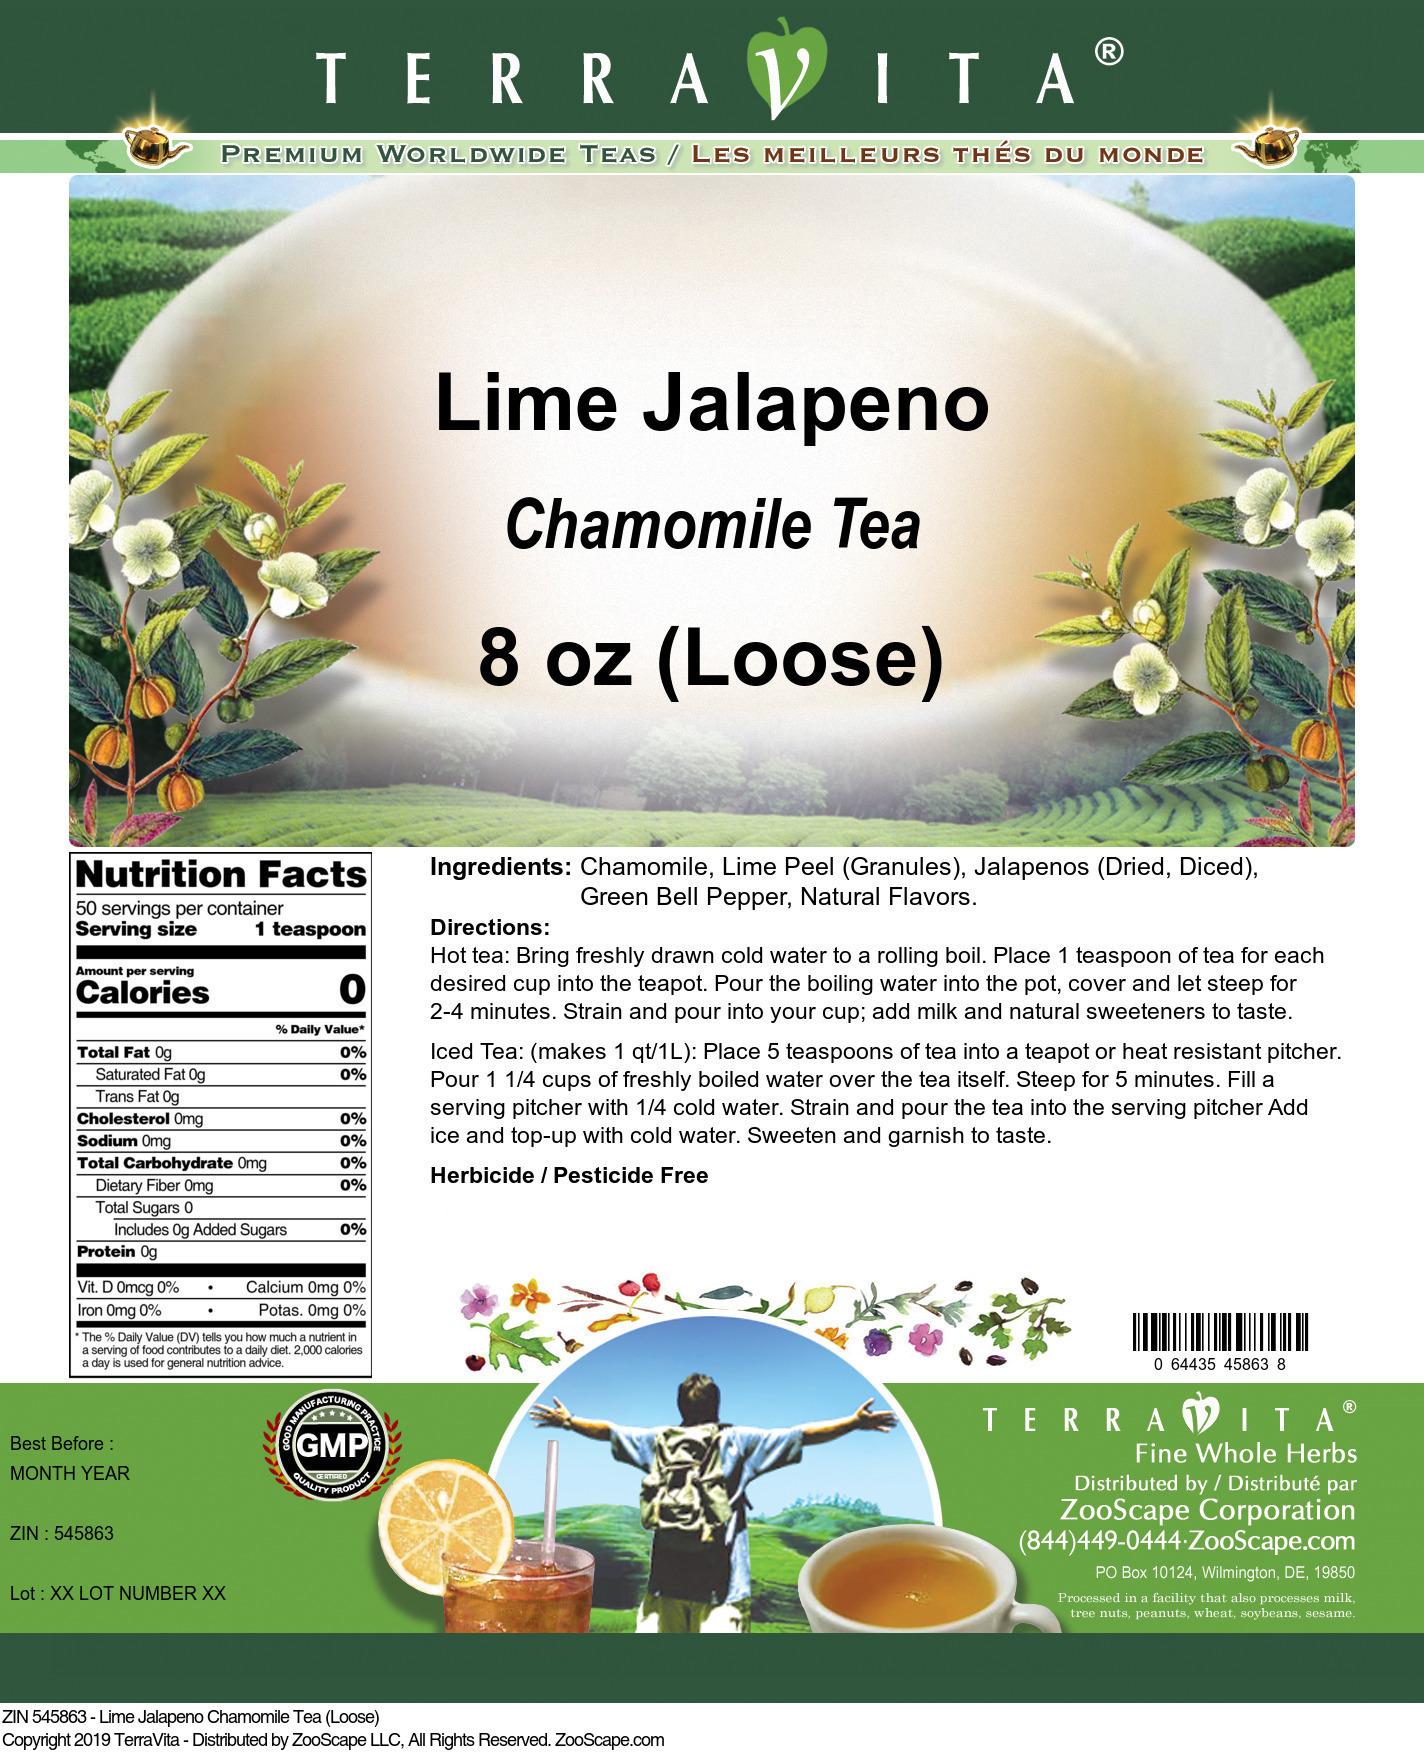 Lime Jalapeno Chamomile Tea (Loose) - Label